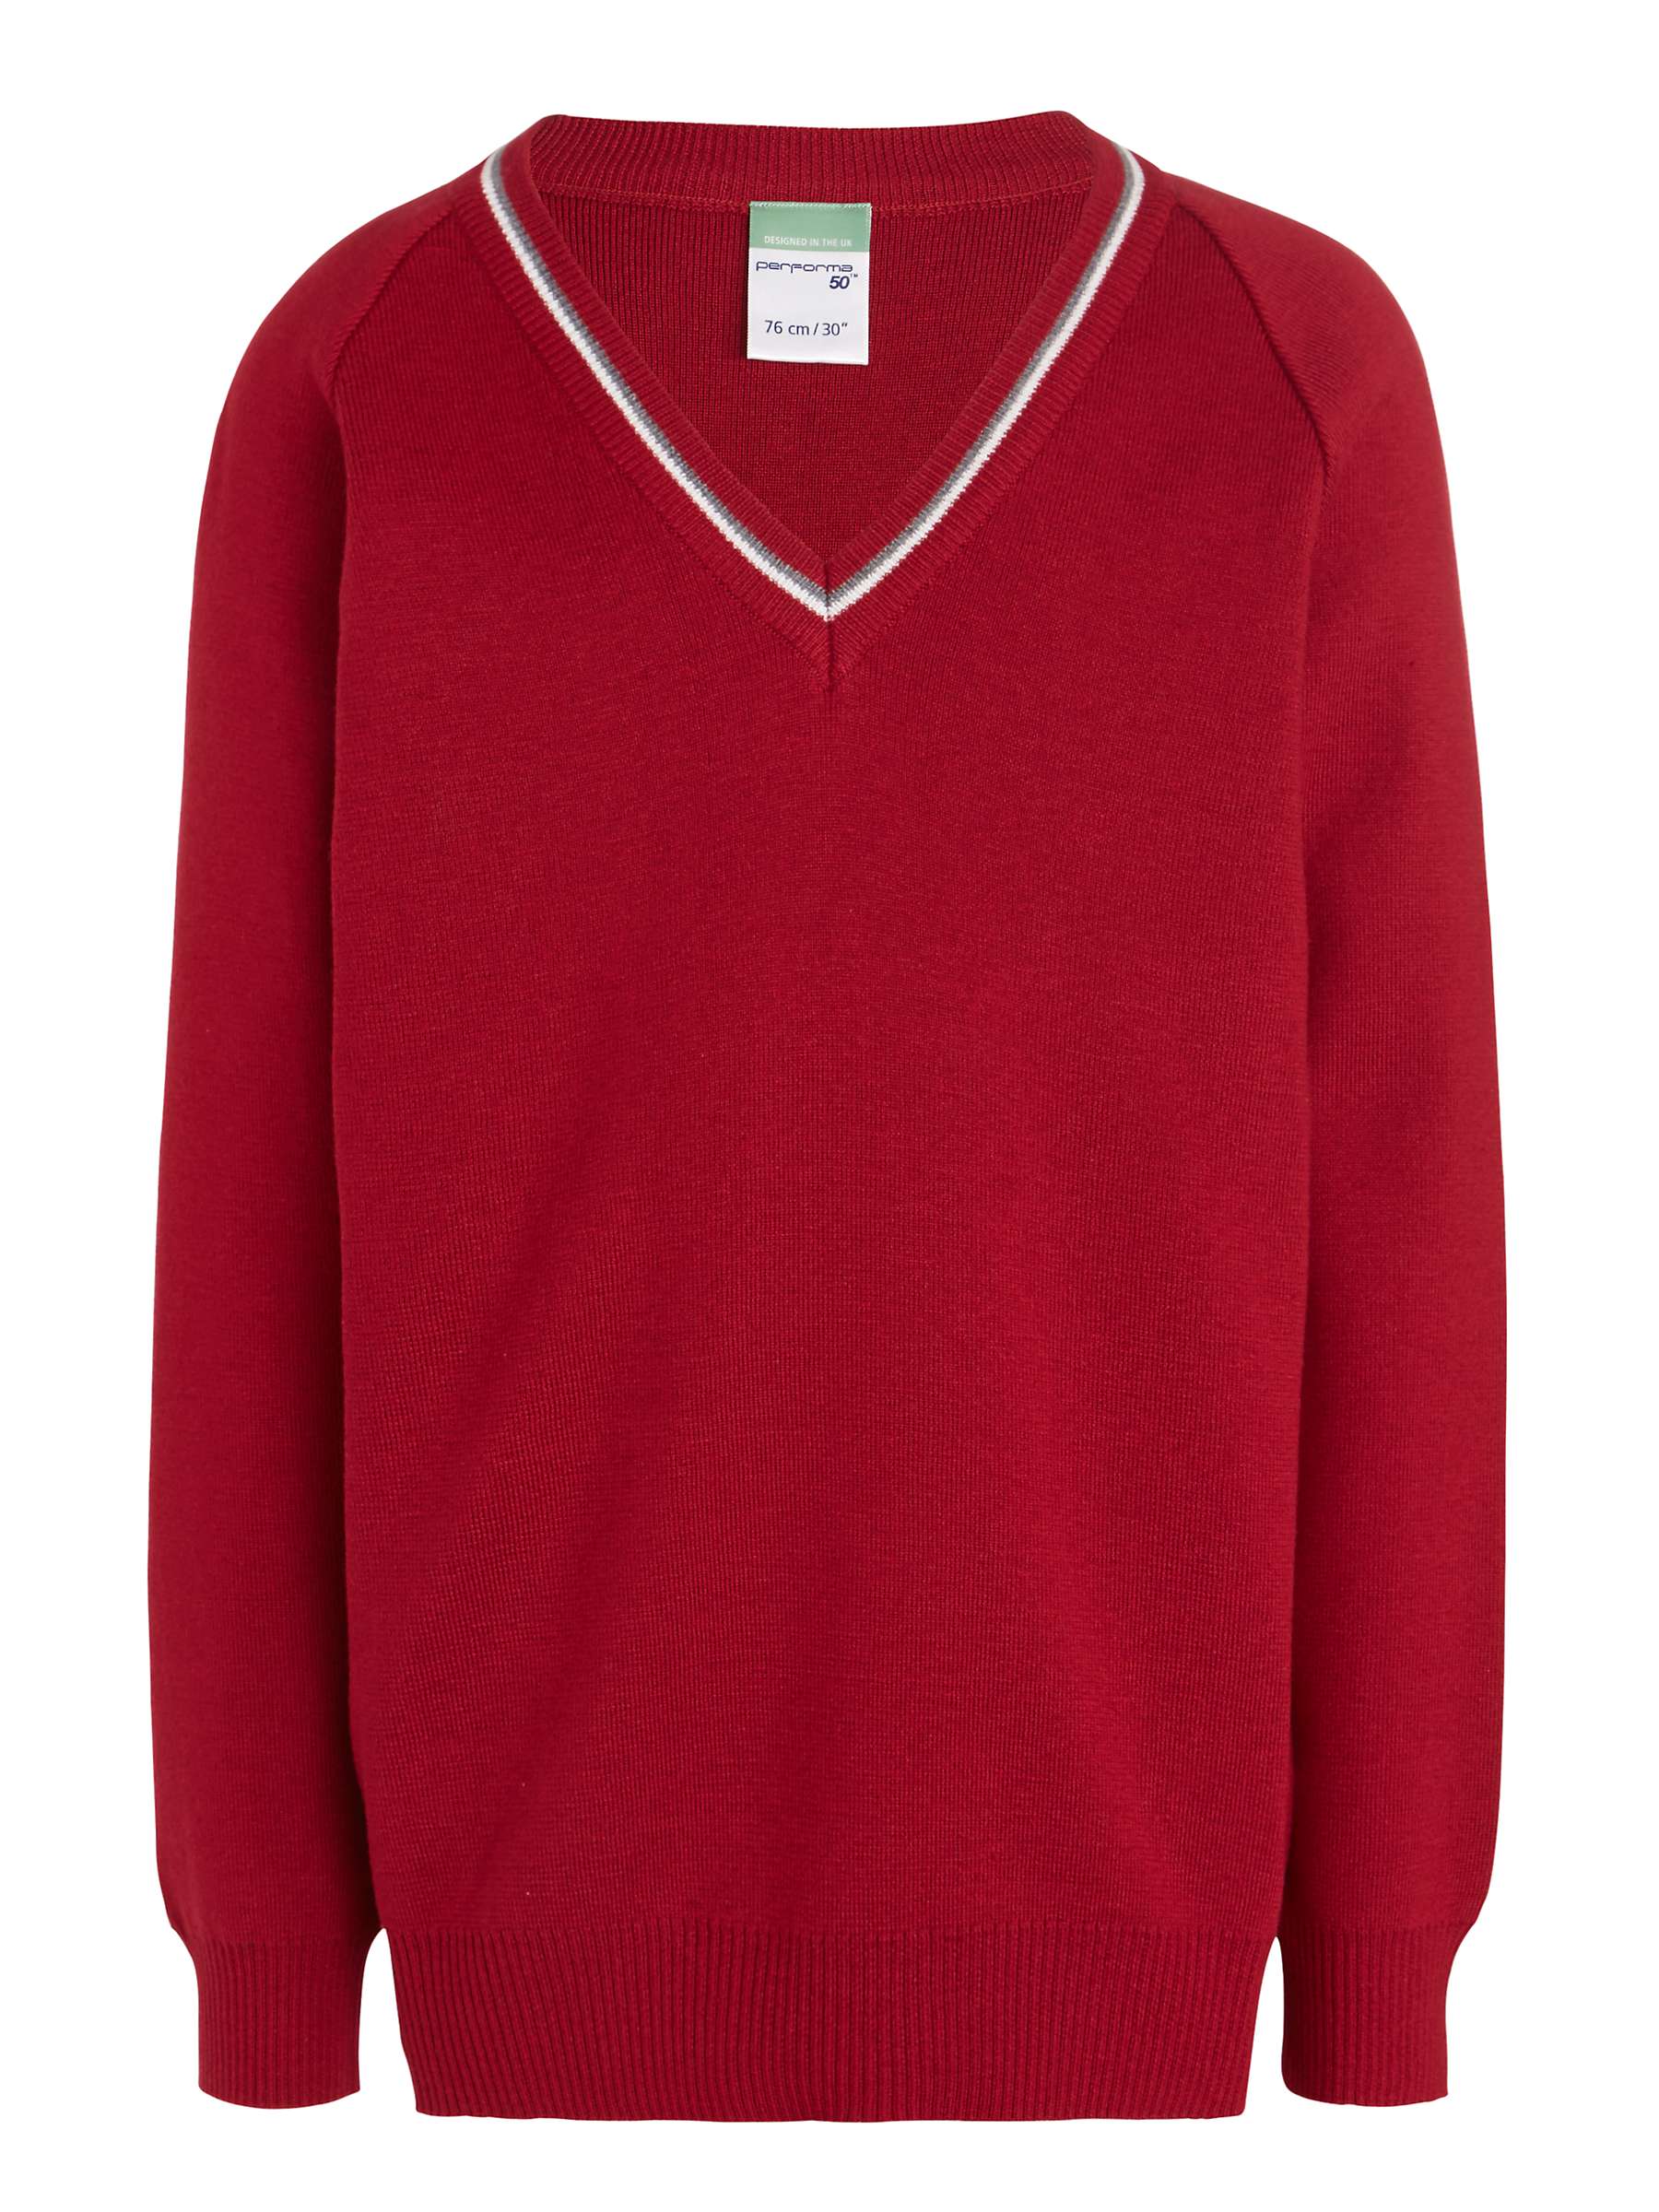 Buy Highclare School Junior Boys' Pullover, Red Online at johnlewis.com